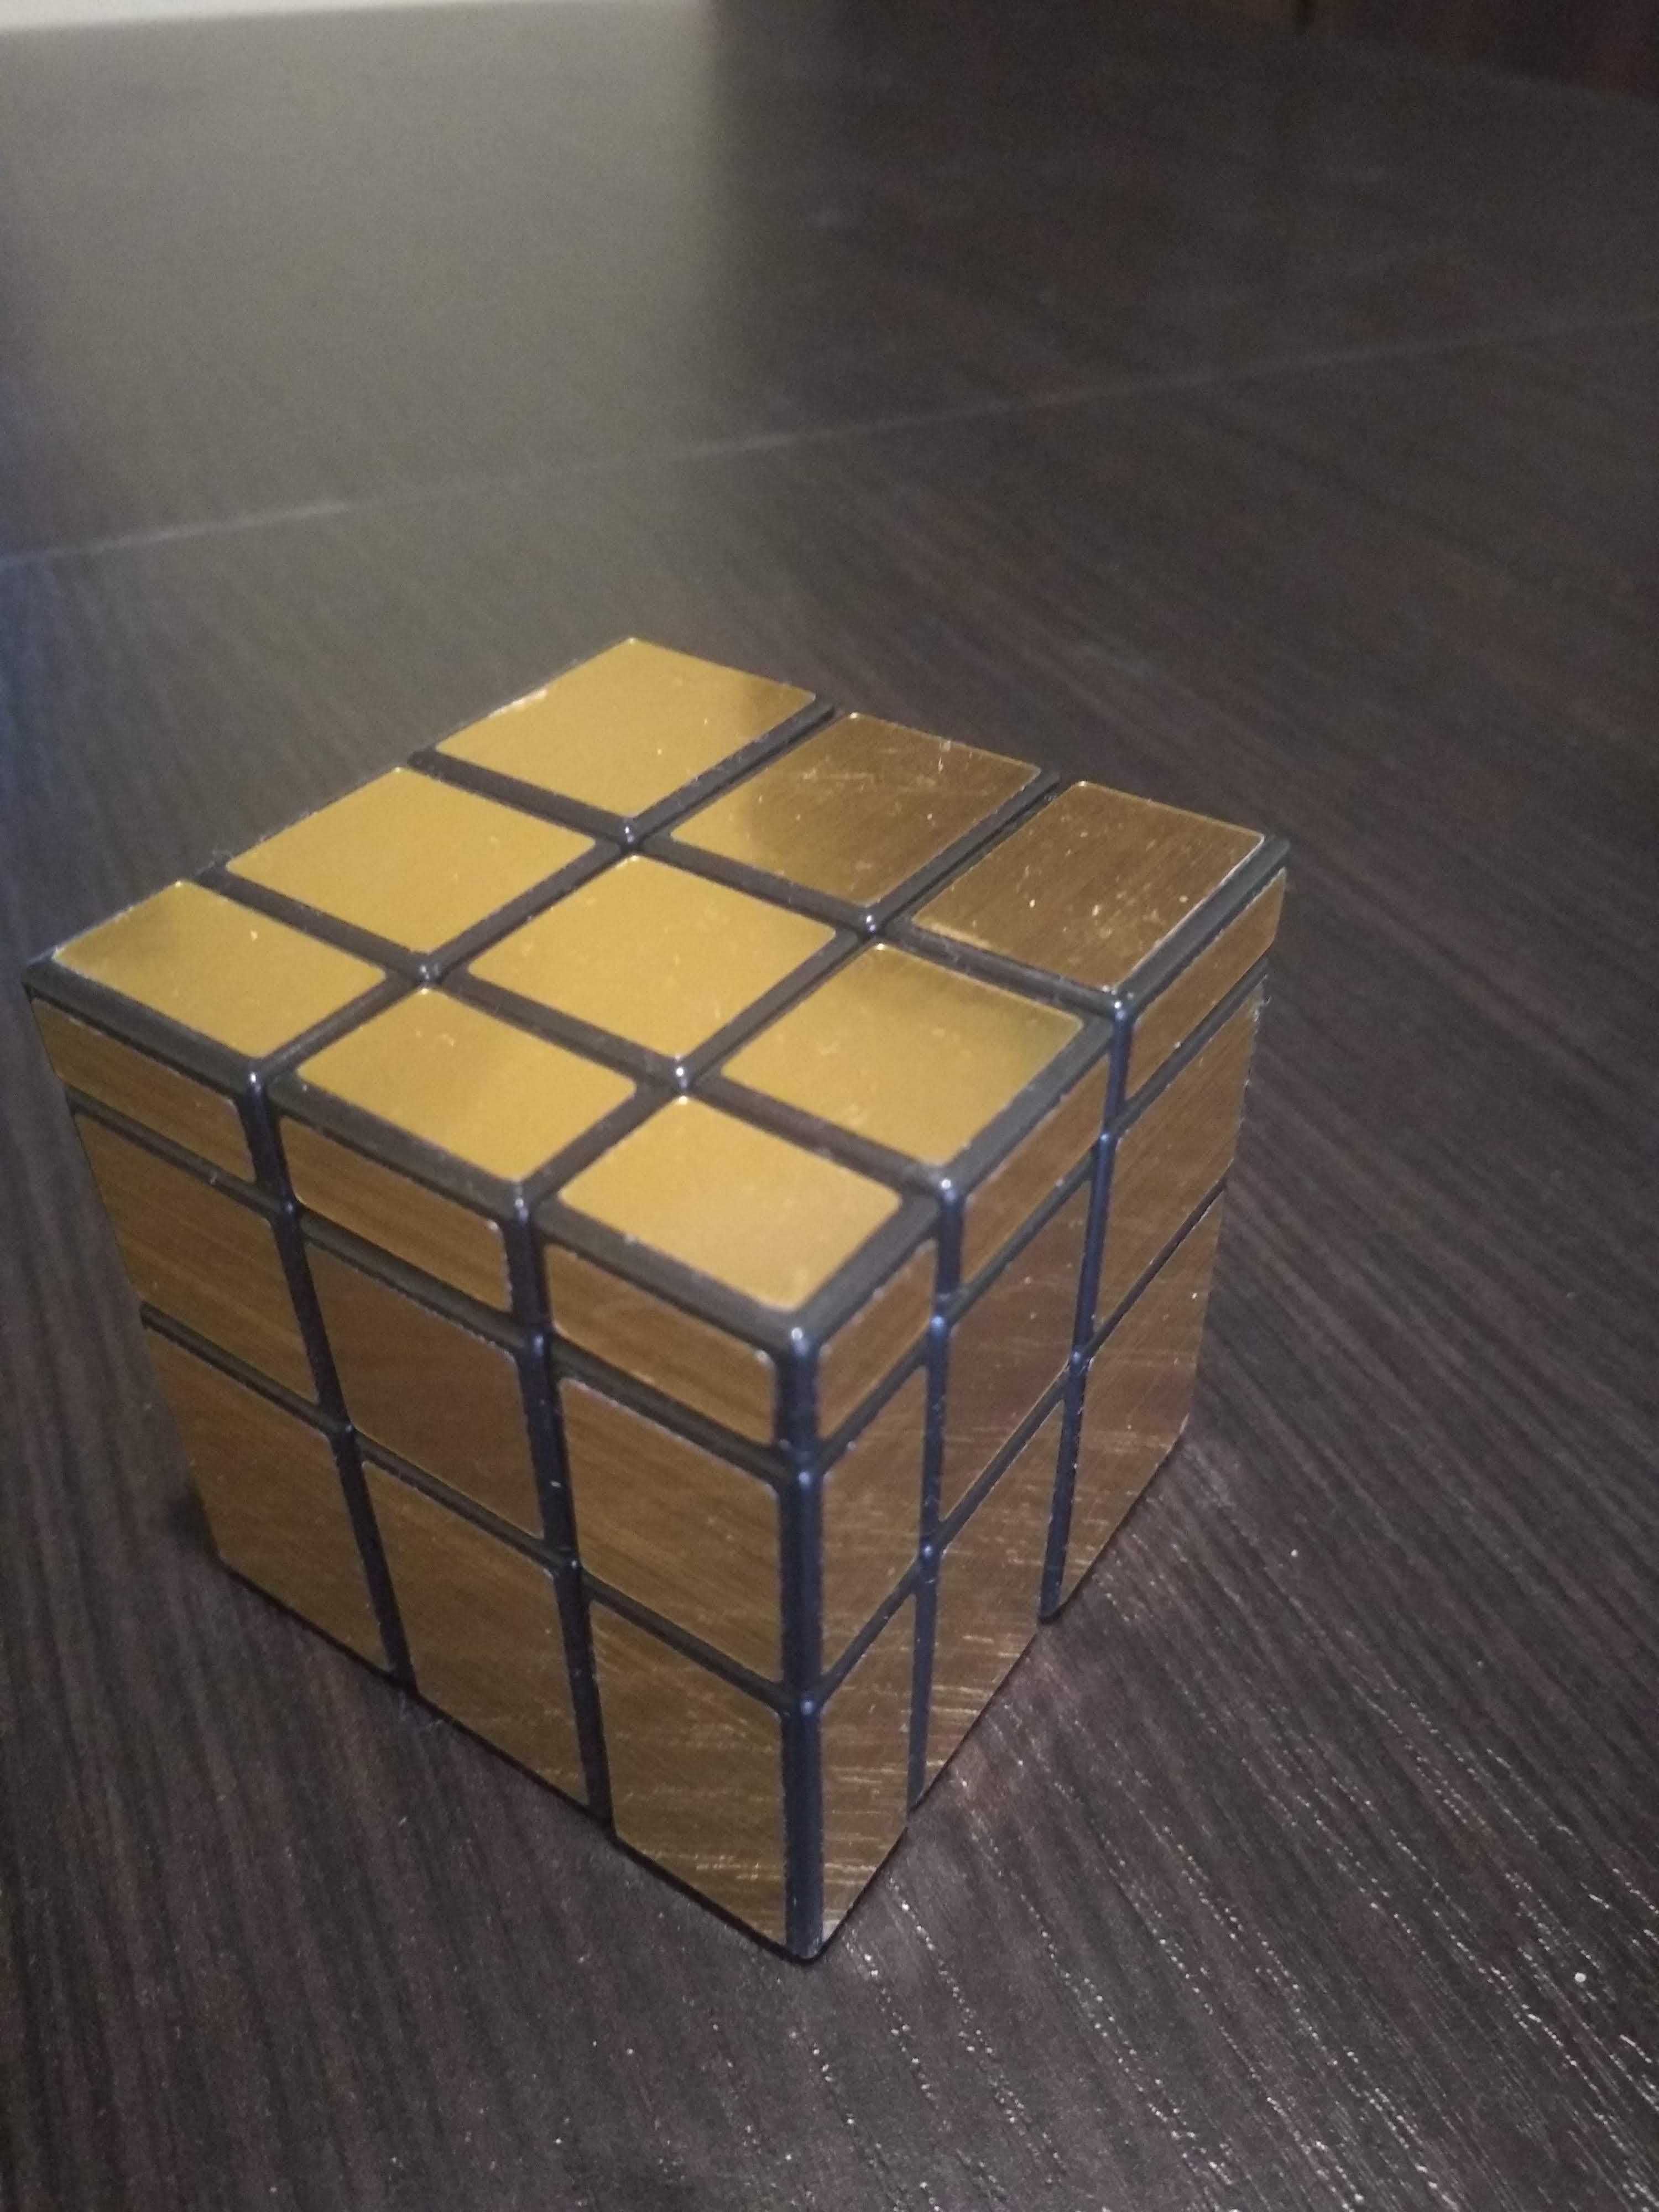 Kostka Rubika nieregularna 3x3x3